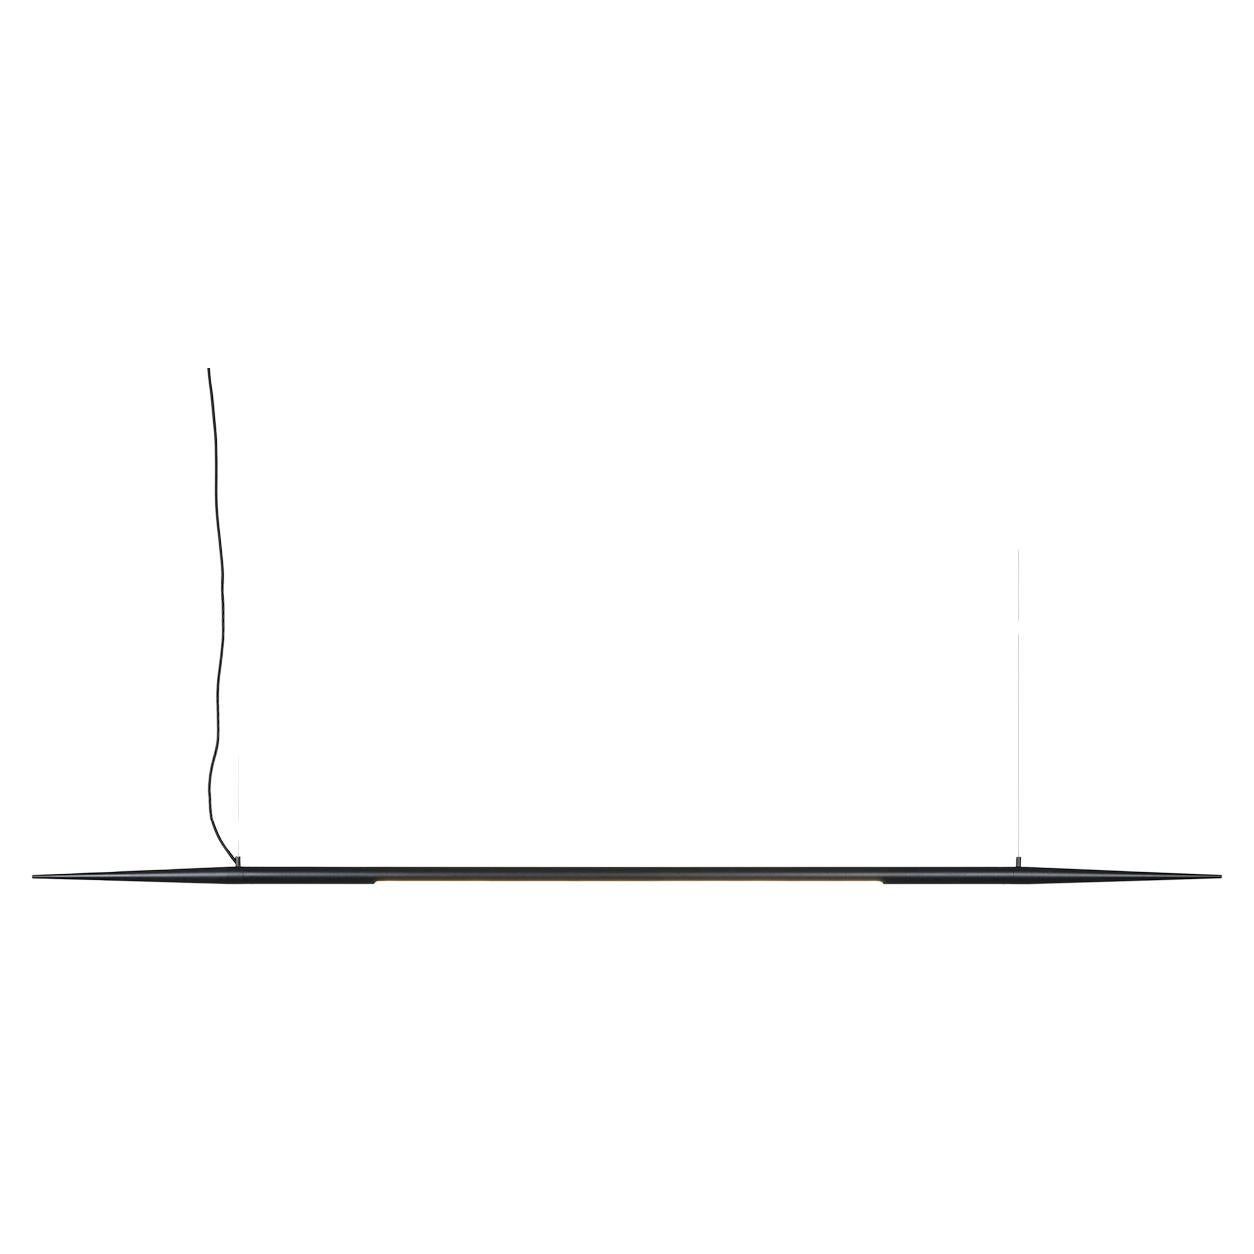 Ferrão Pendant Lamp, 180cm, by Rain, Contemporary Lamp, Aluminium, Black For Sale